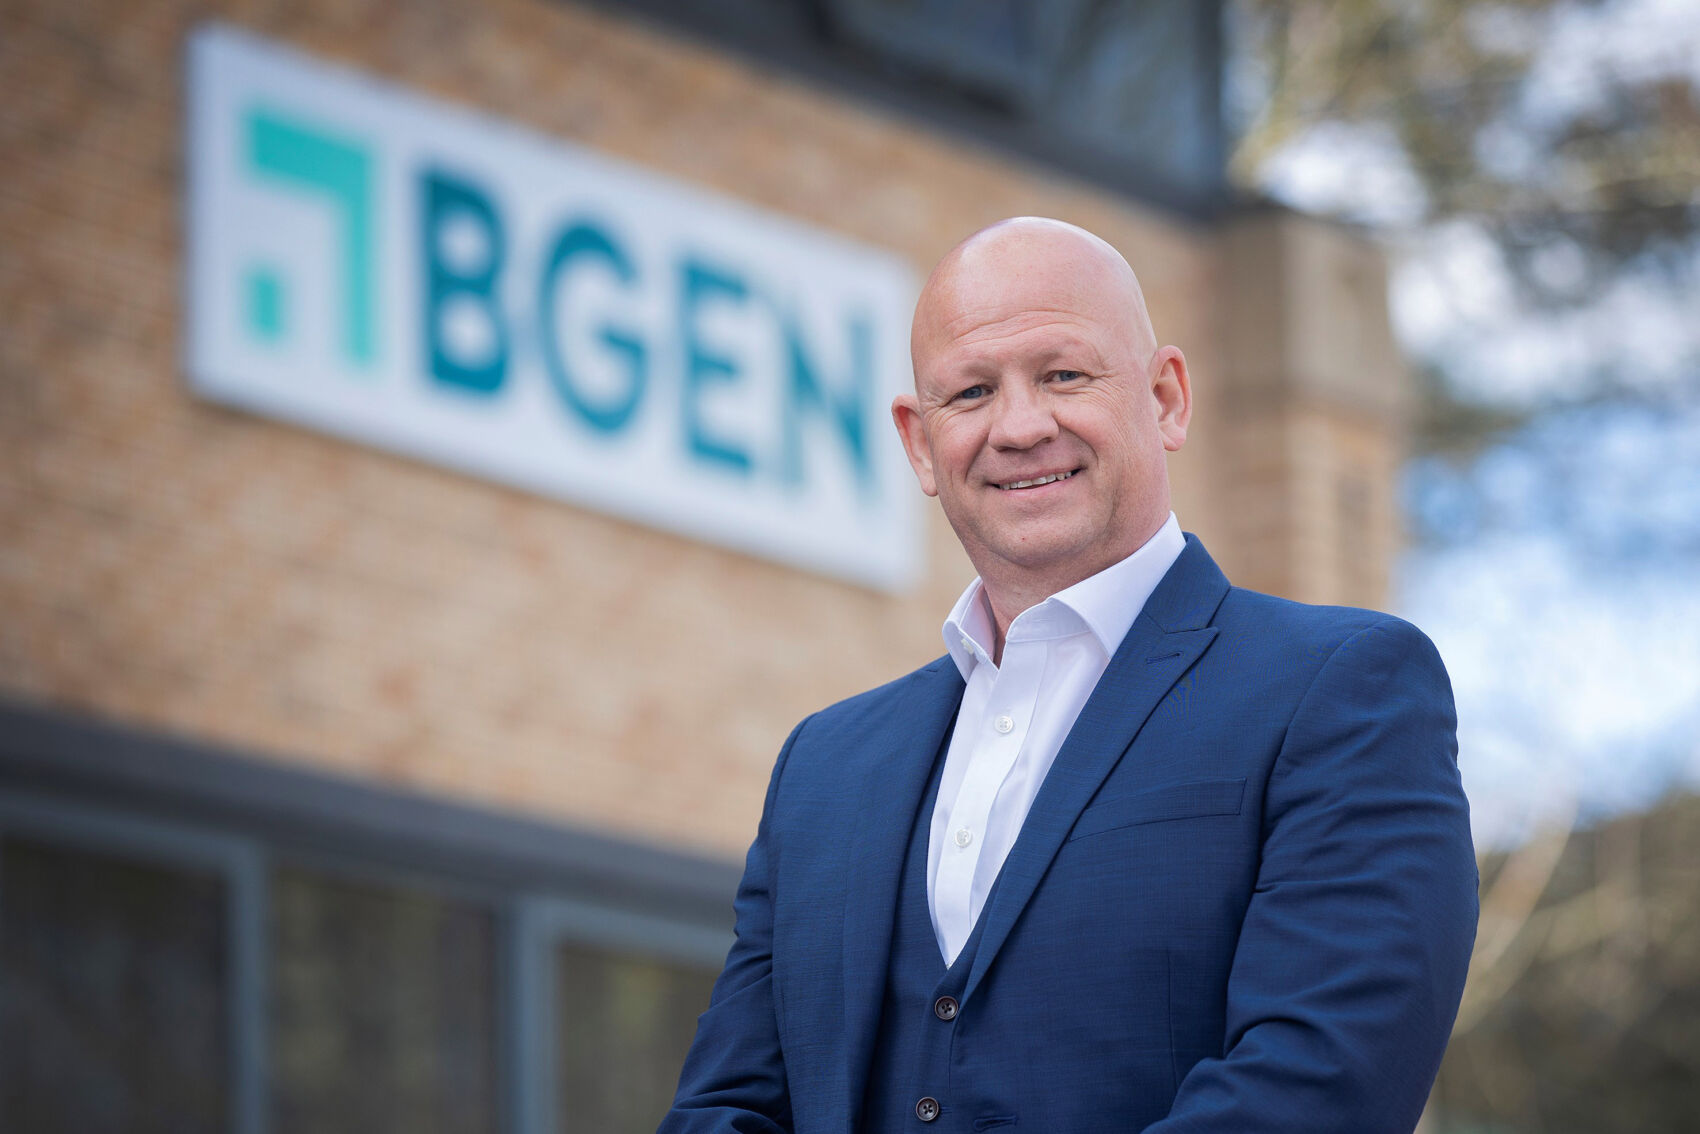 BGEN appoints Greg Duncan as group health & safety director